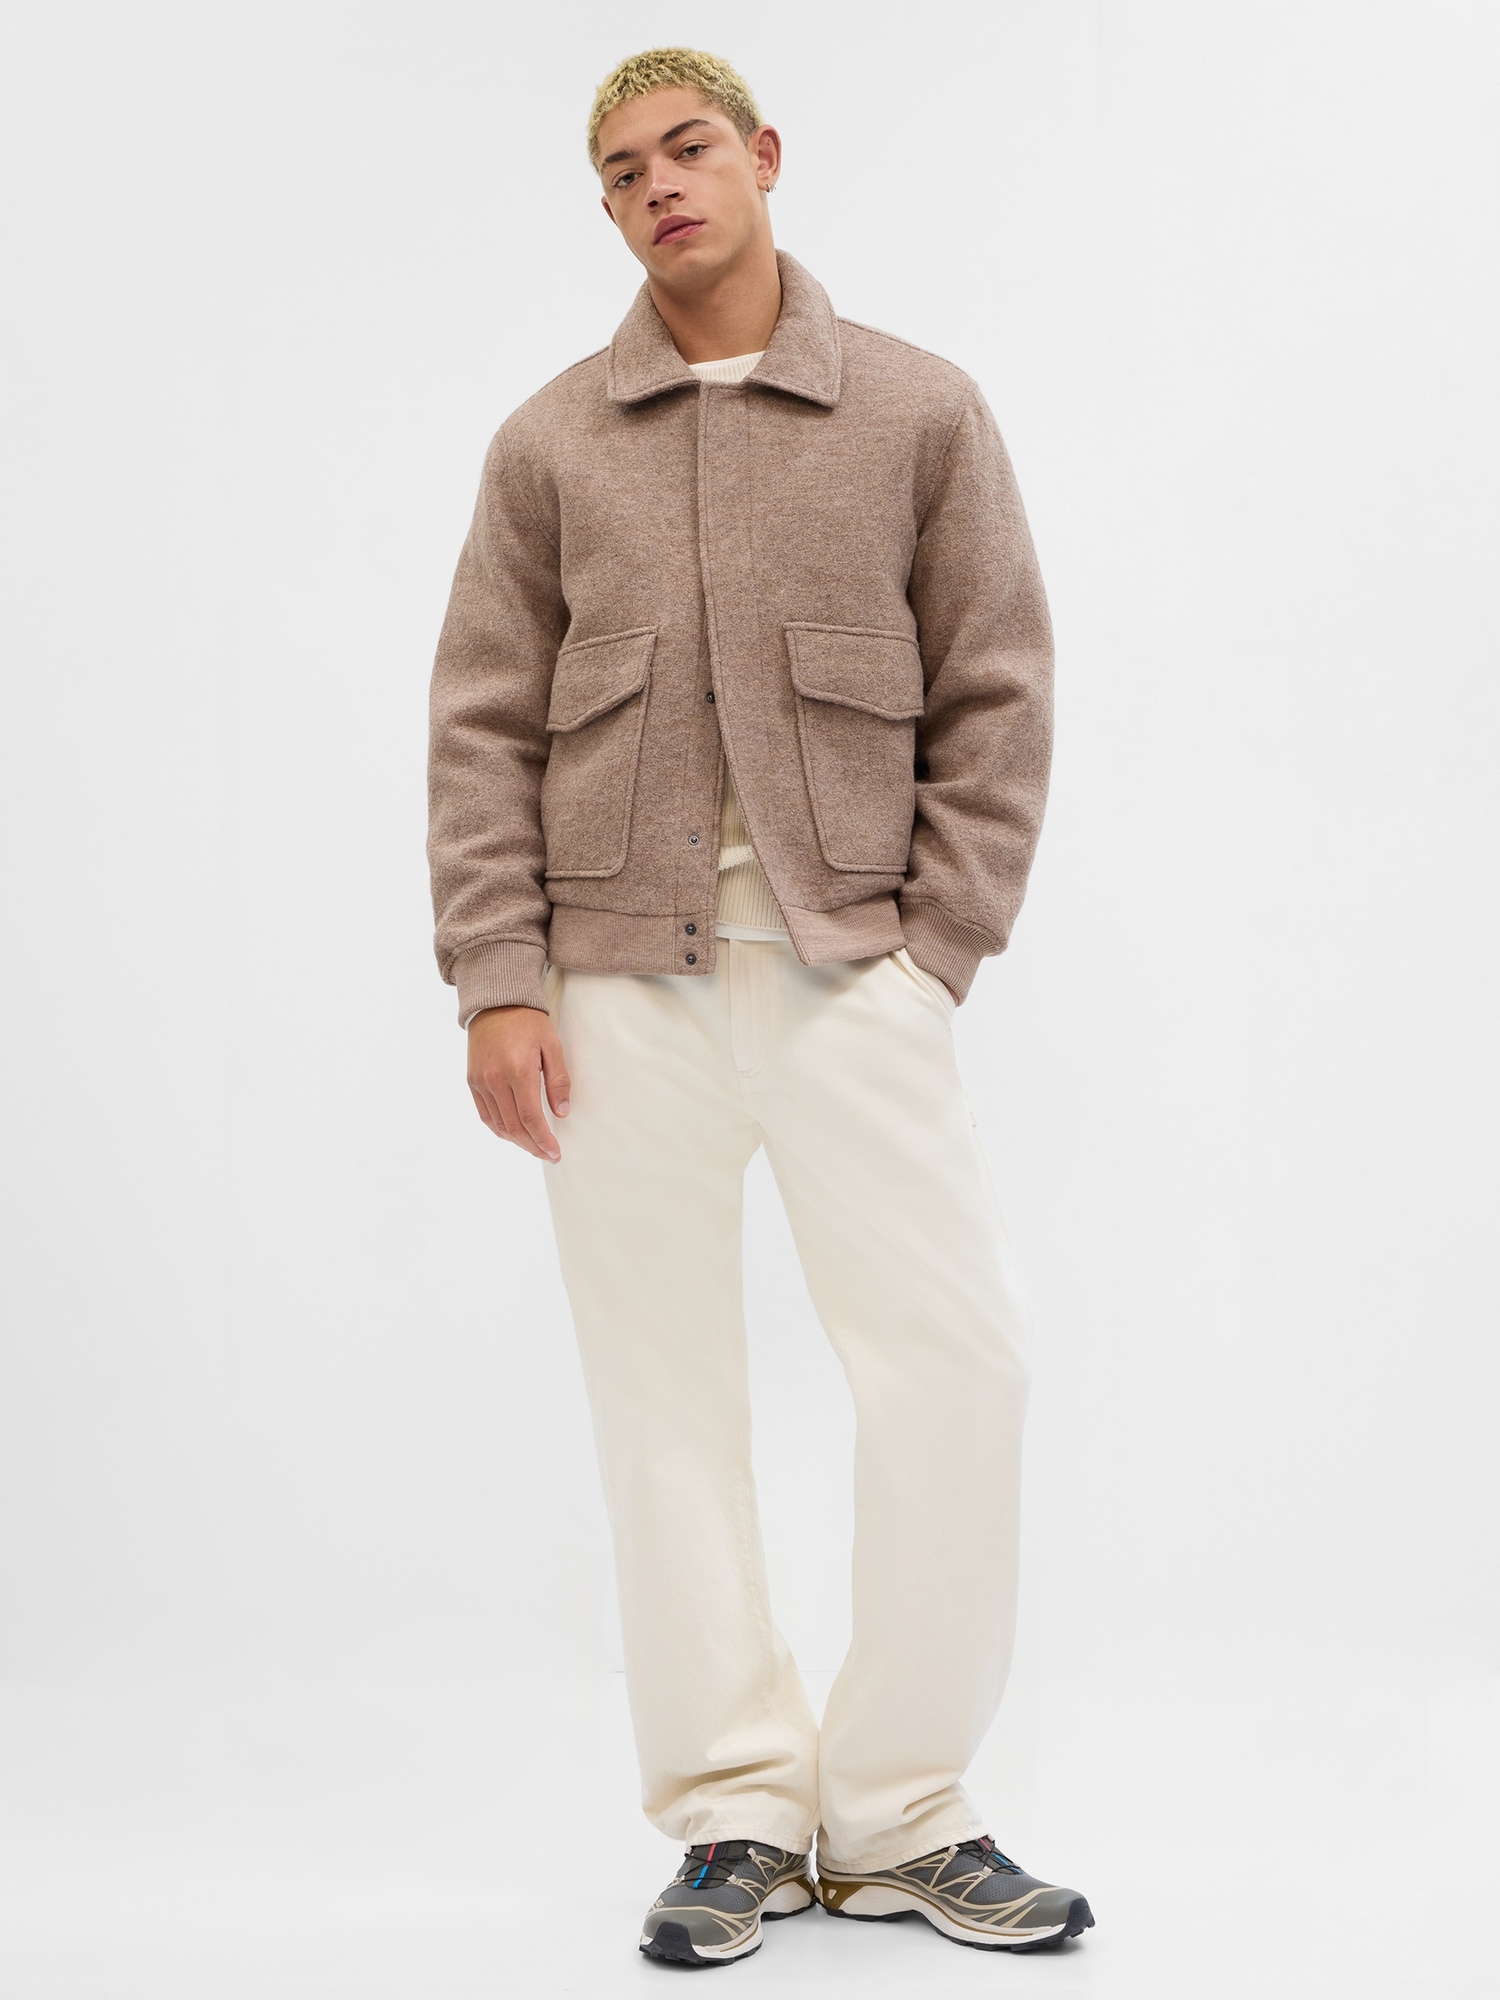 Wool Patch-Pocket Jacket | Gap